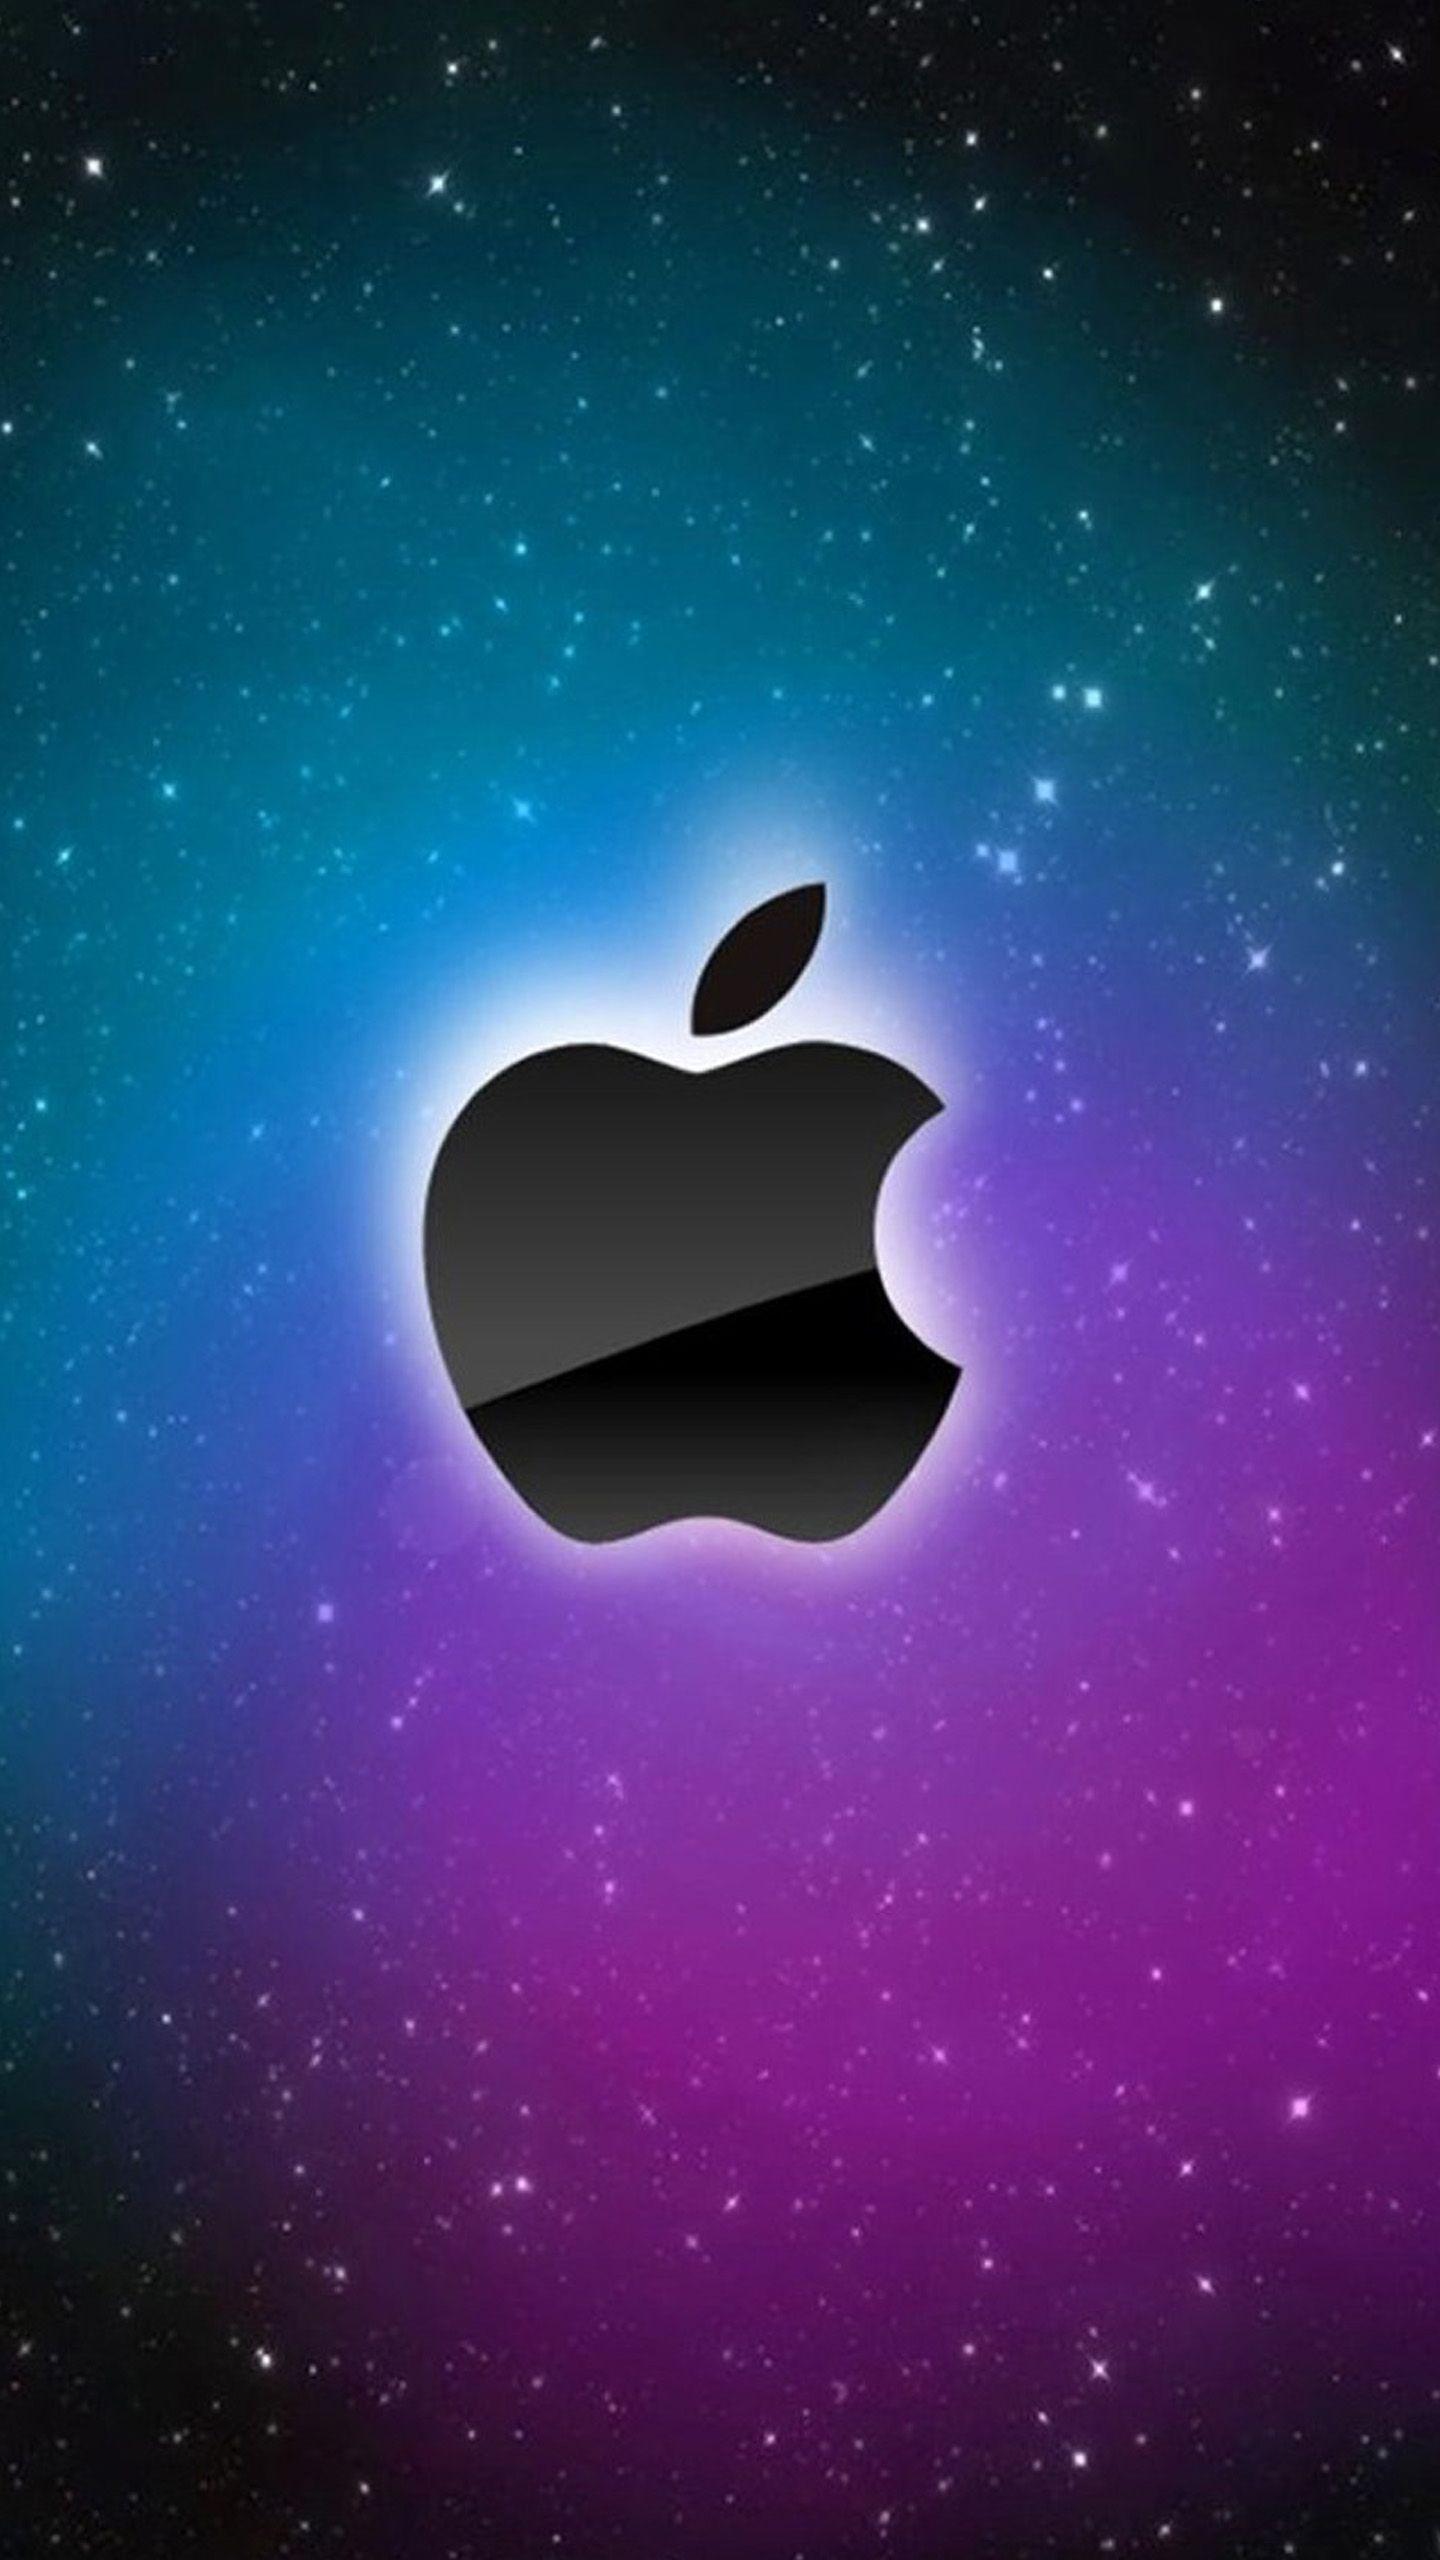 Apple Galaxy Logo - Awesome Apple logo 5 Galaxy S6 Wallpaper | Galaxy S6 Wallpapers